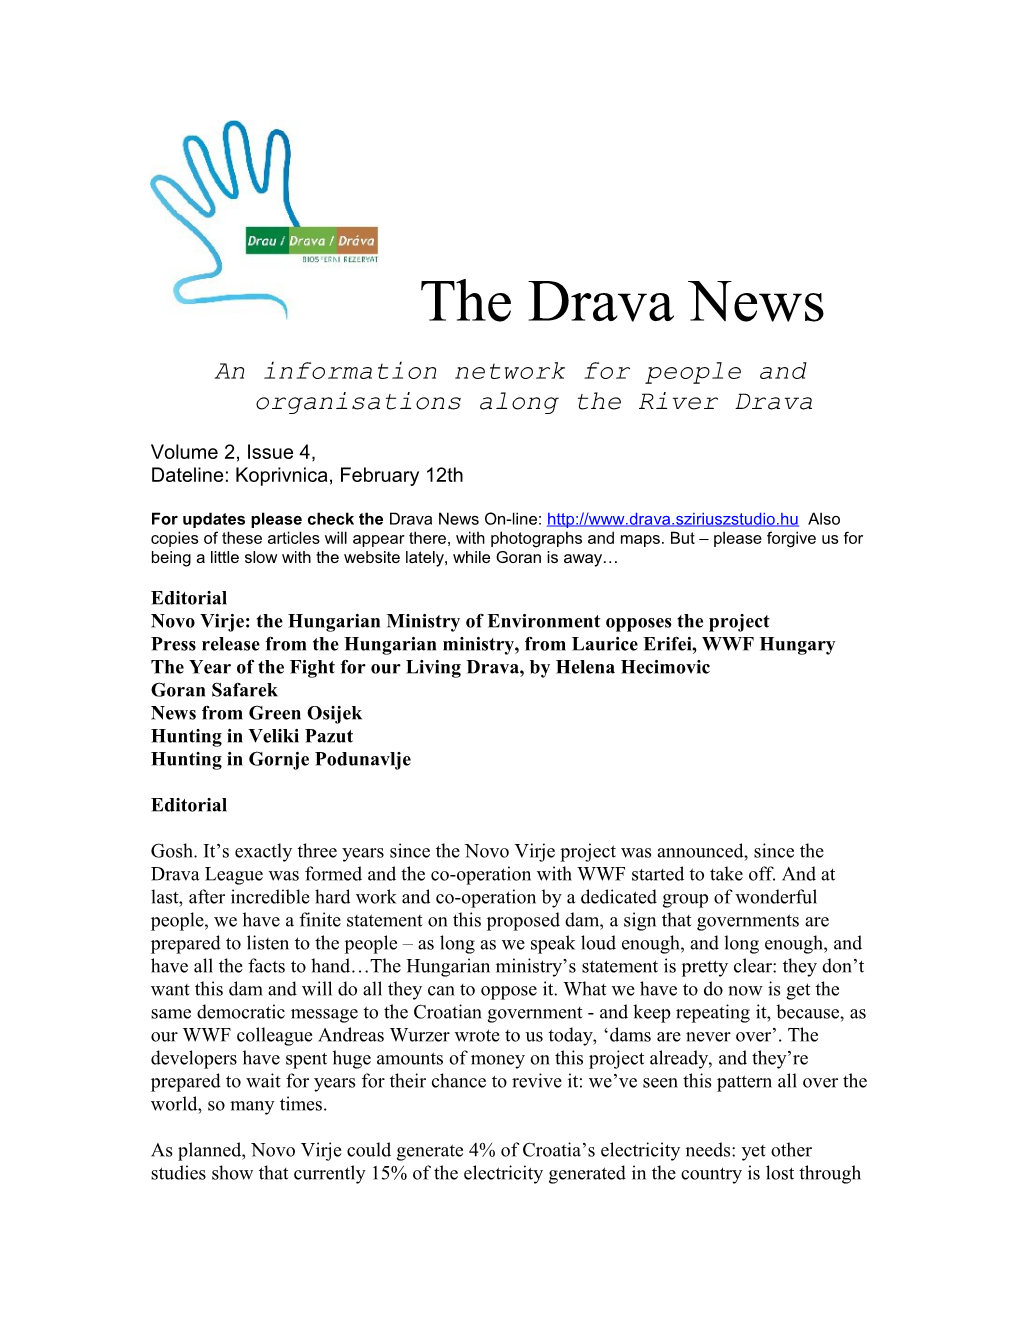 The Drava News